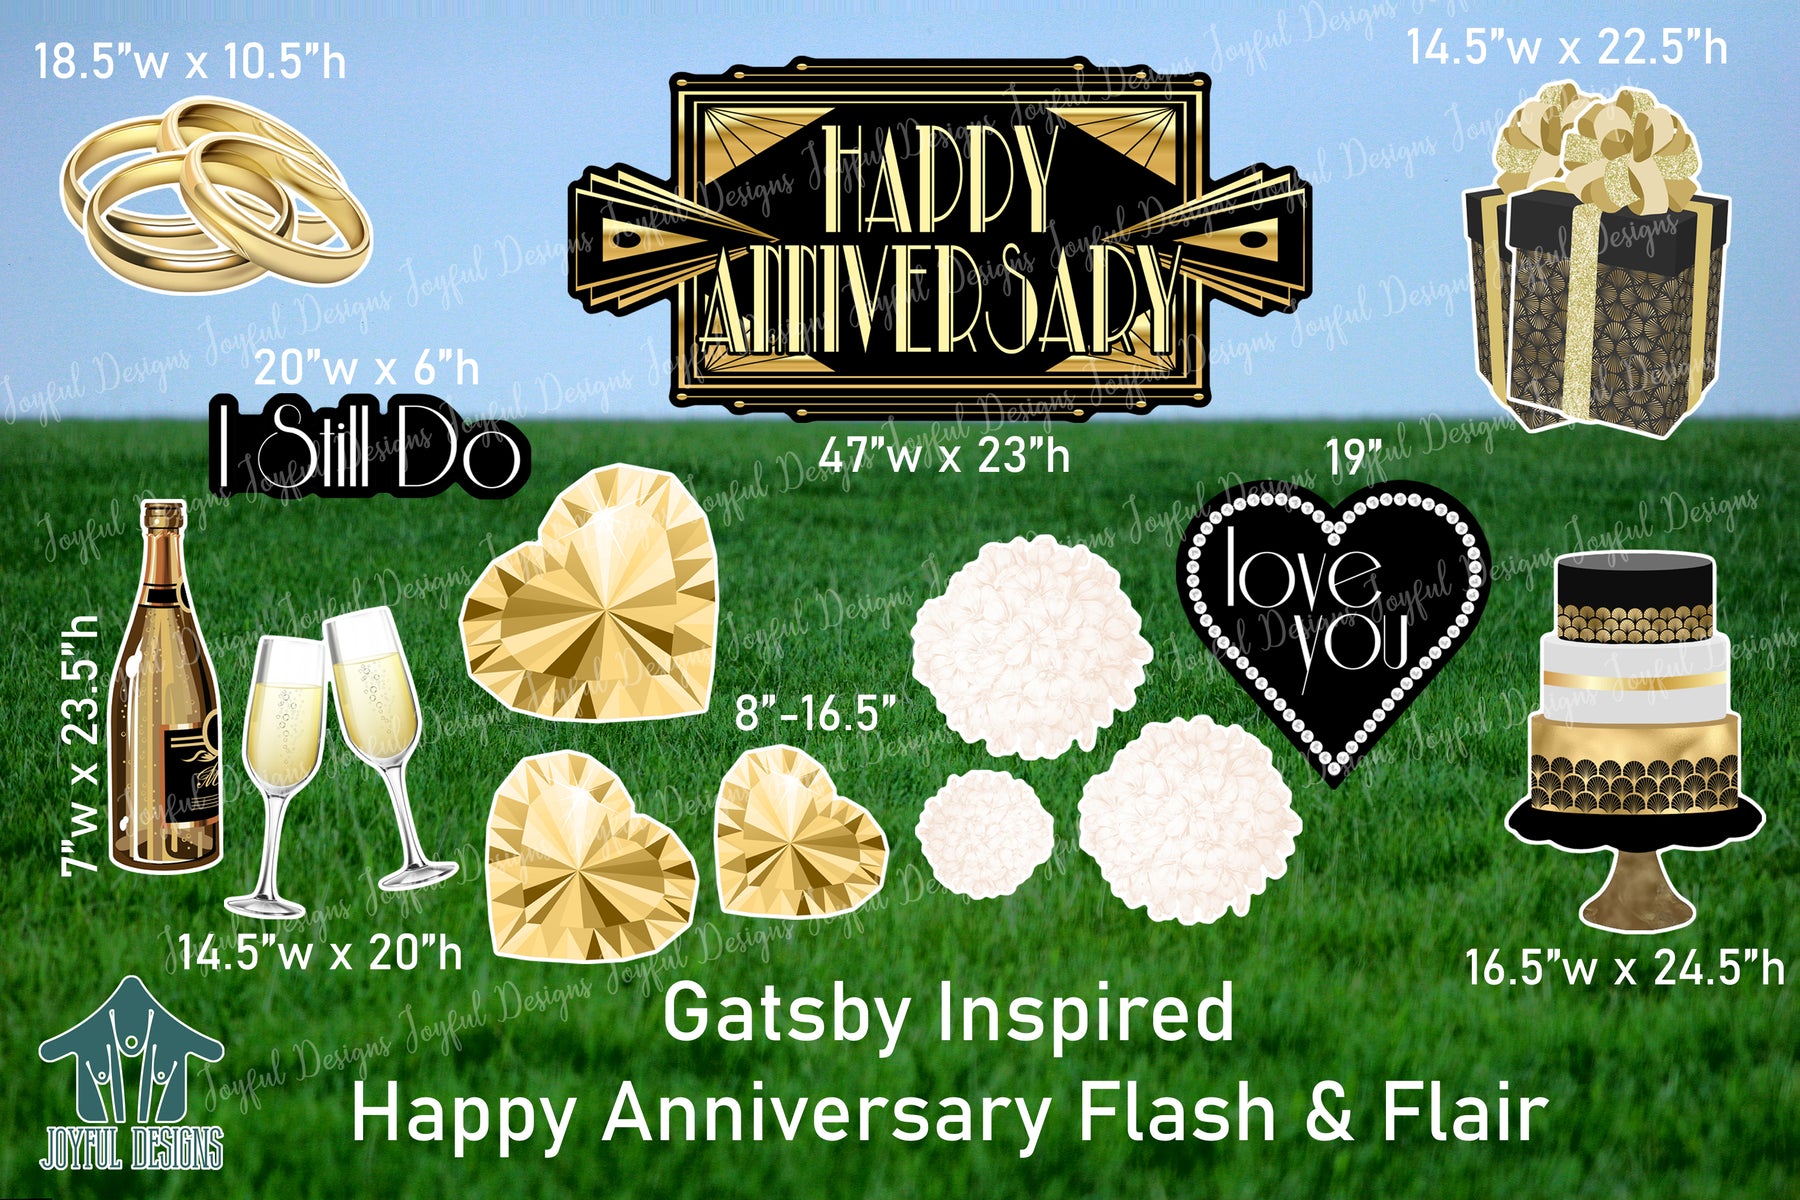 HAPPY ANNIVERSARY - Gatsby Inspired Centerpiece & Flair Set